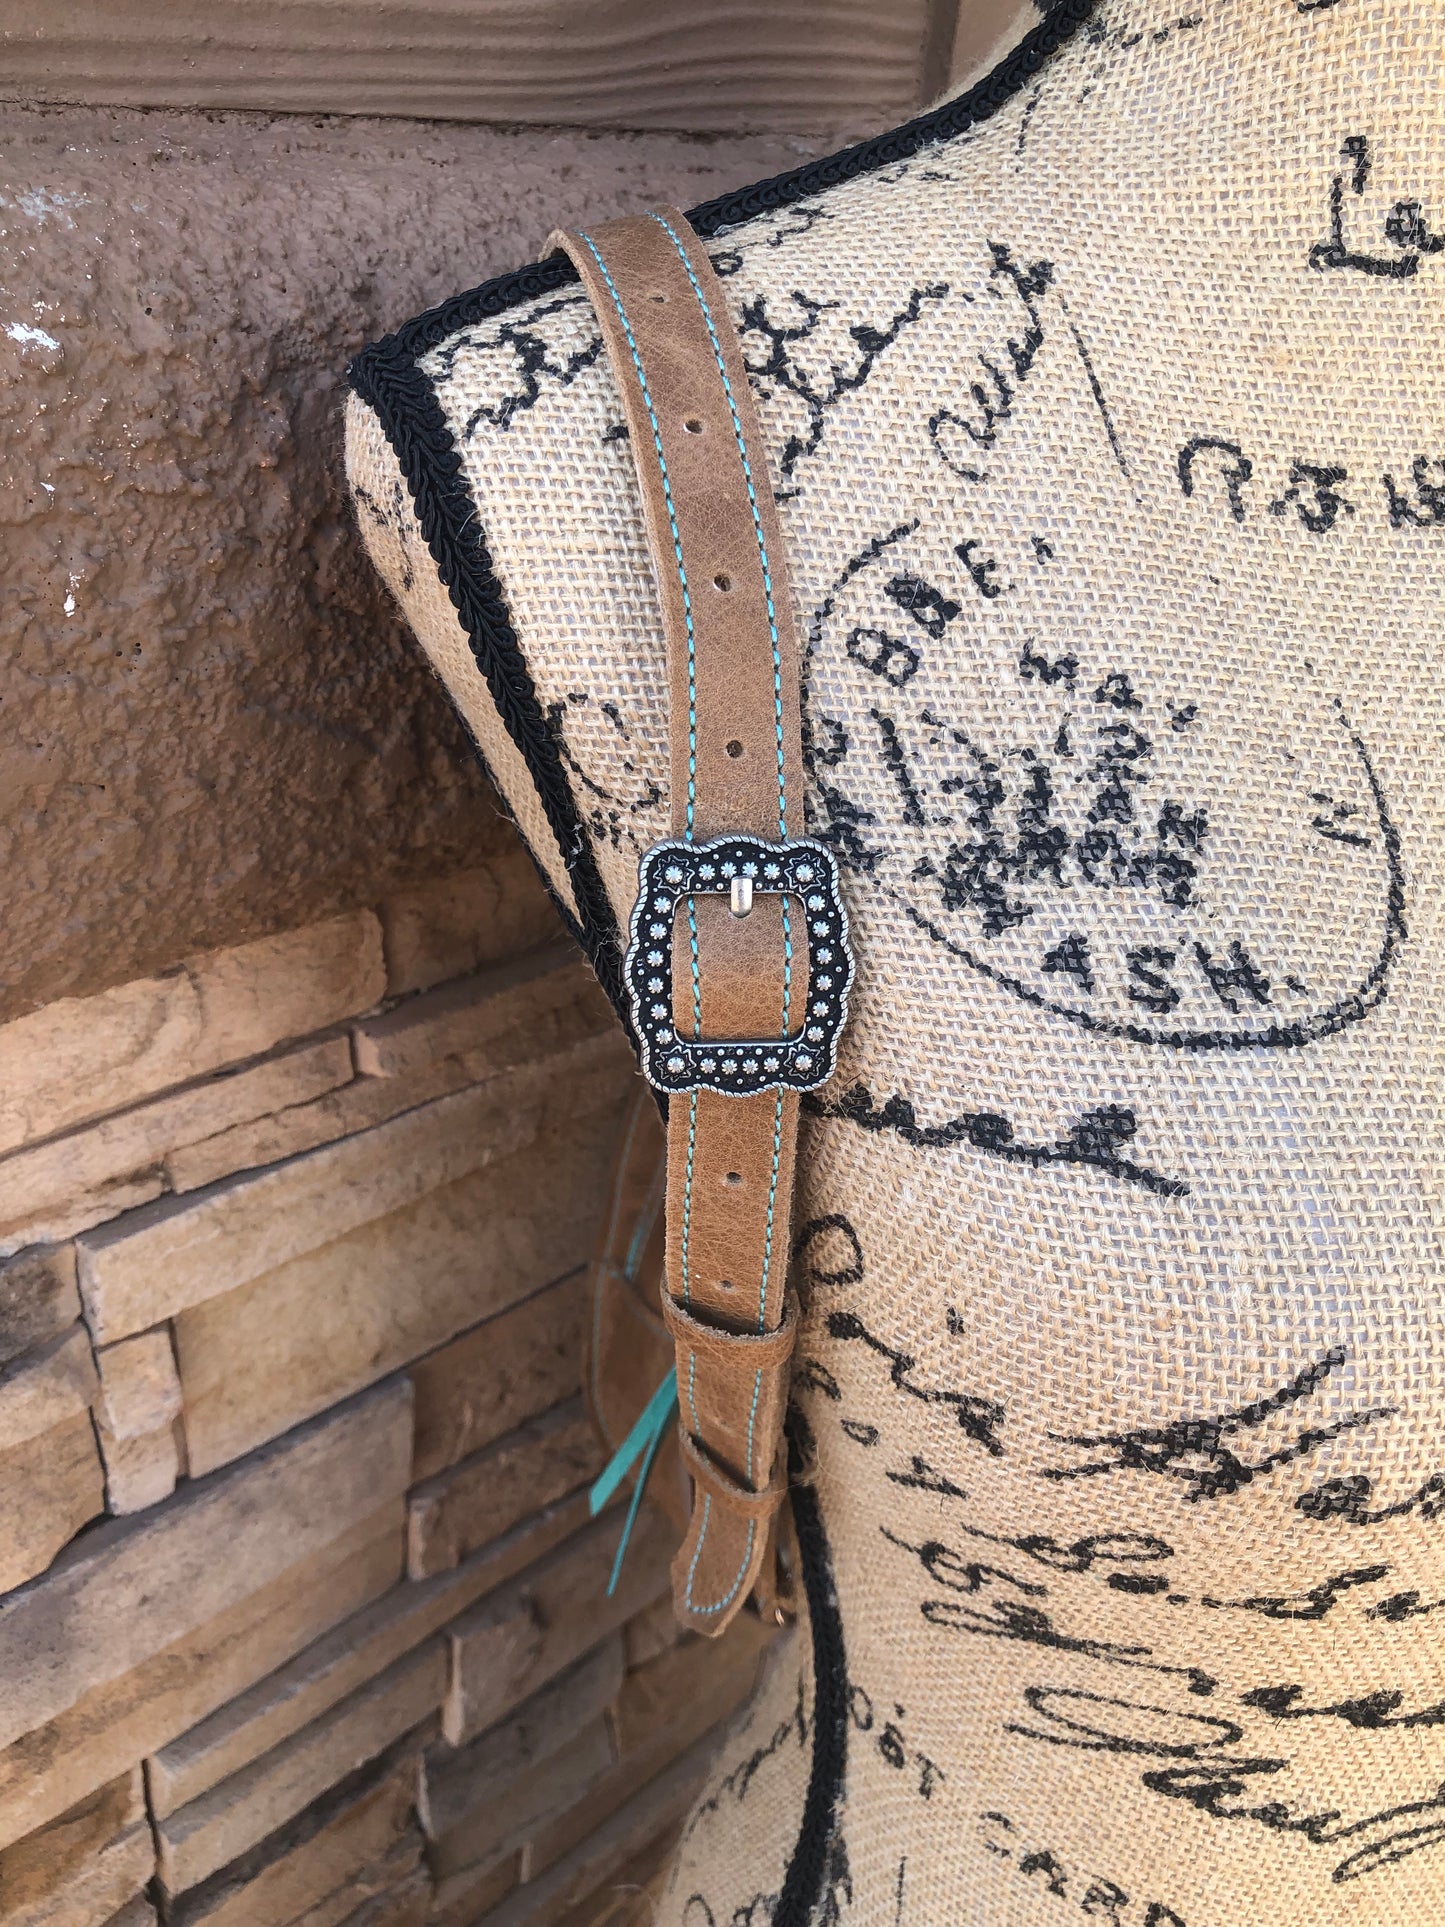 Southwestern tooled leather thunderbird patch backpack purse.